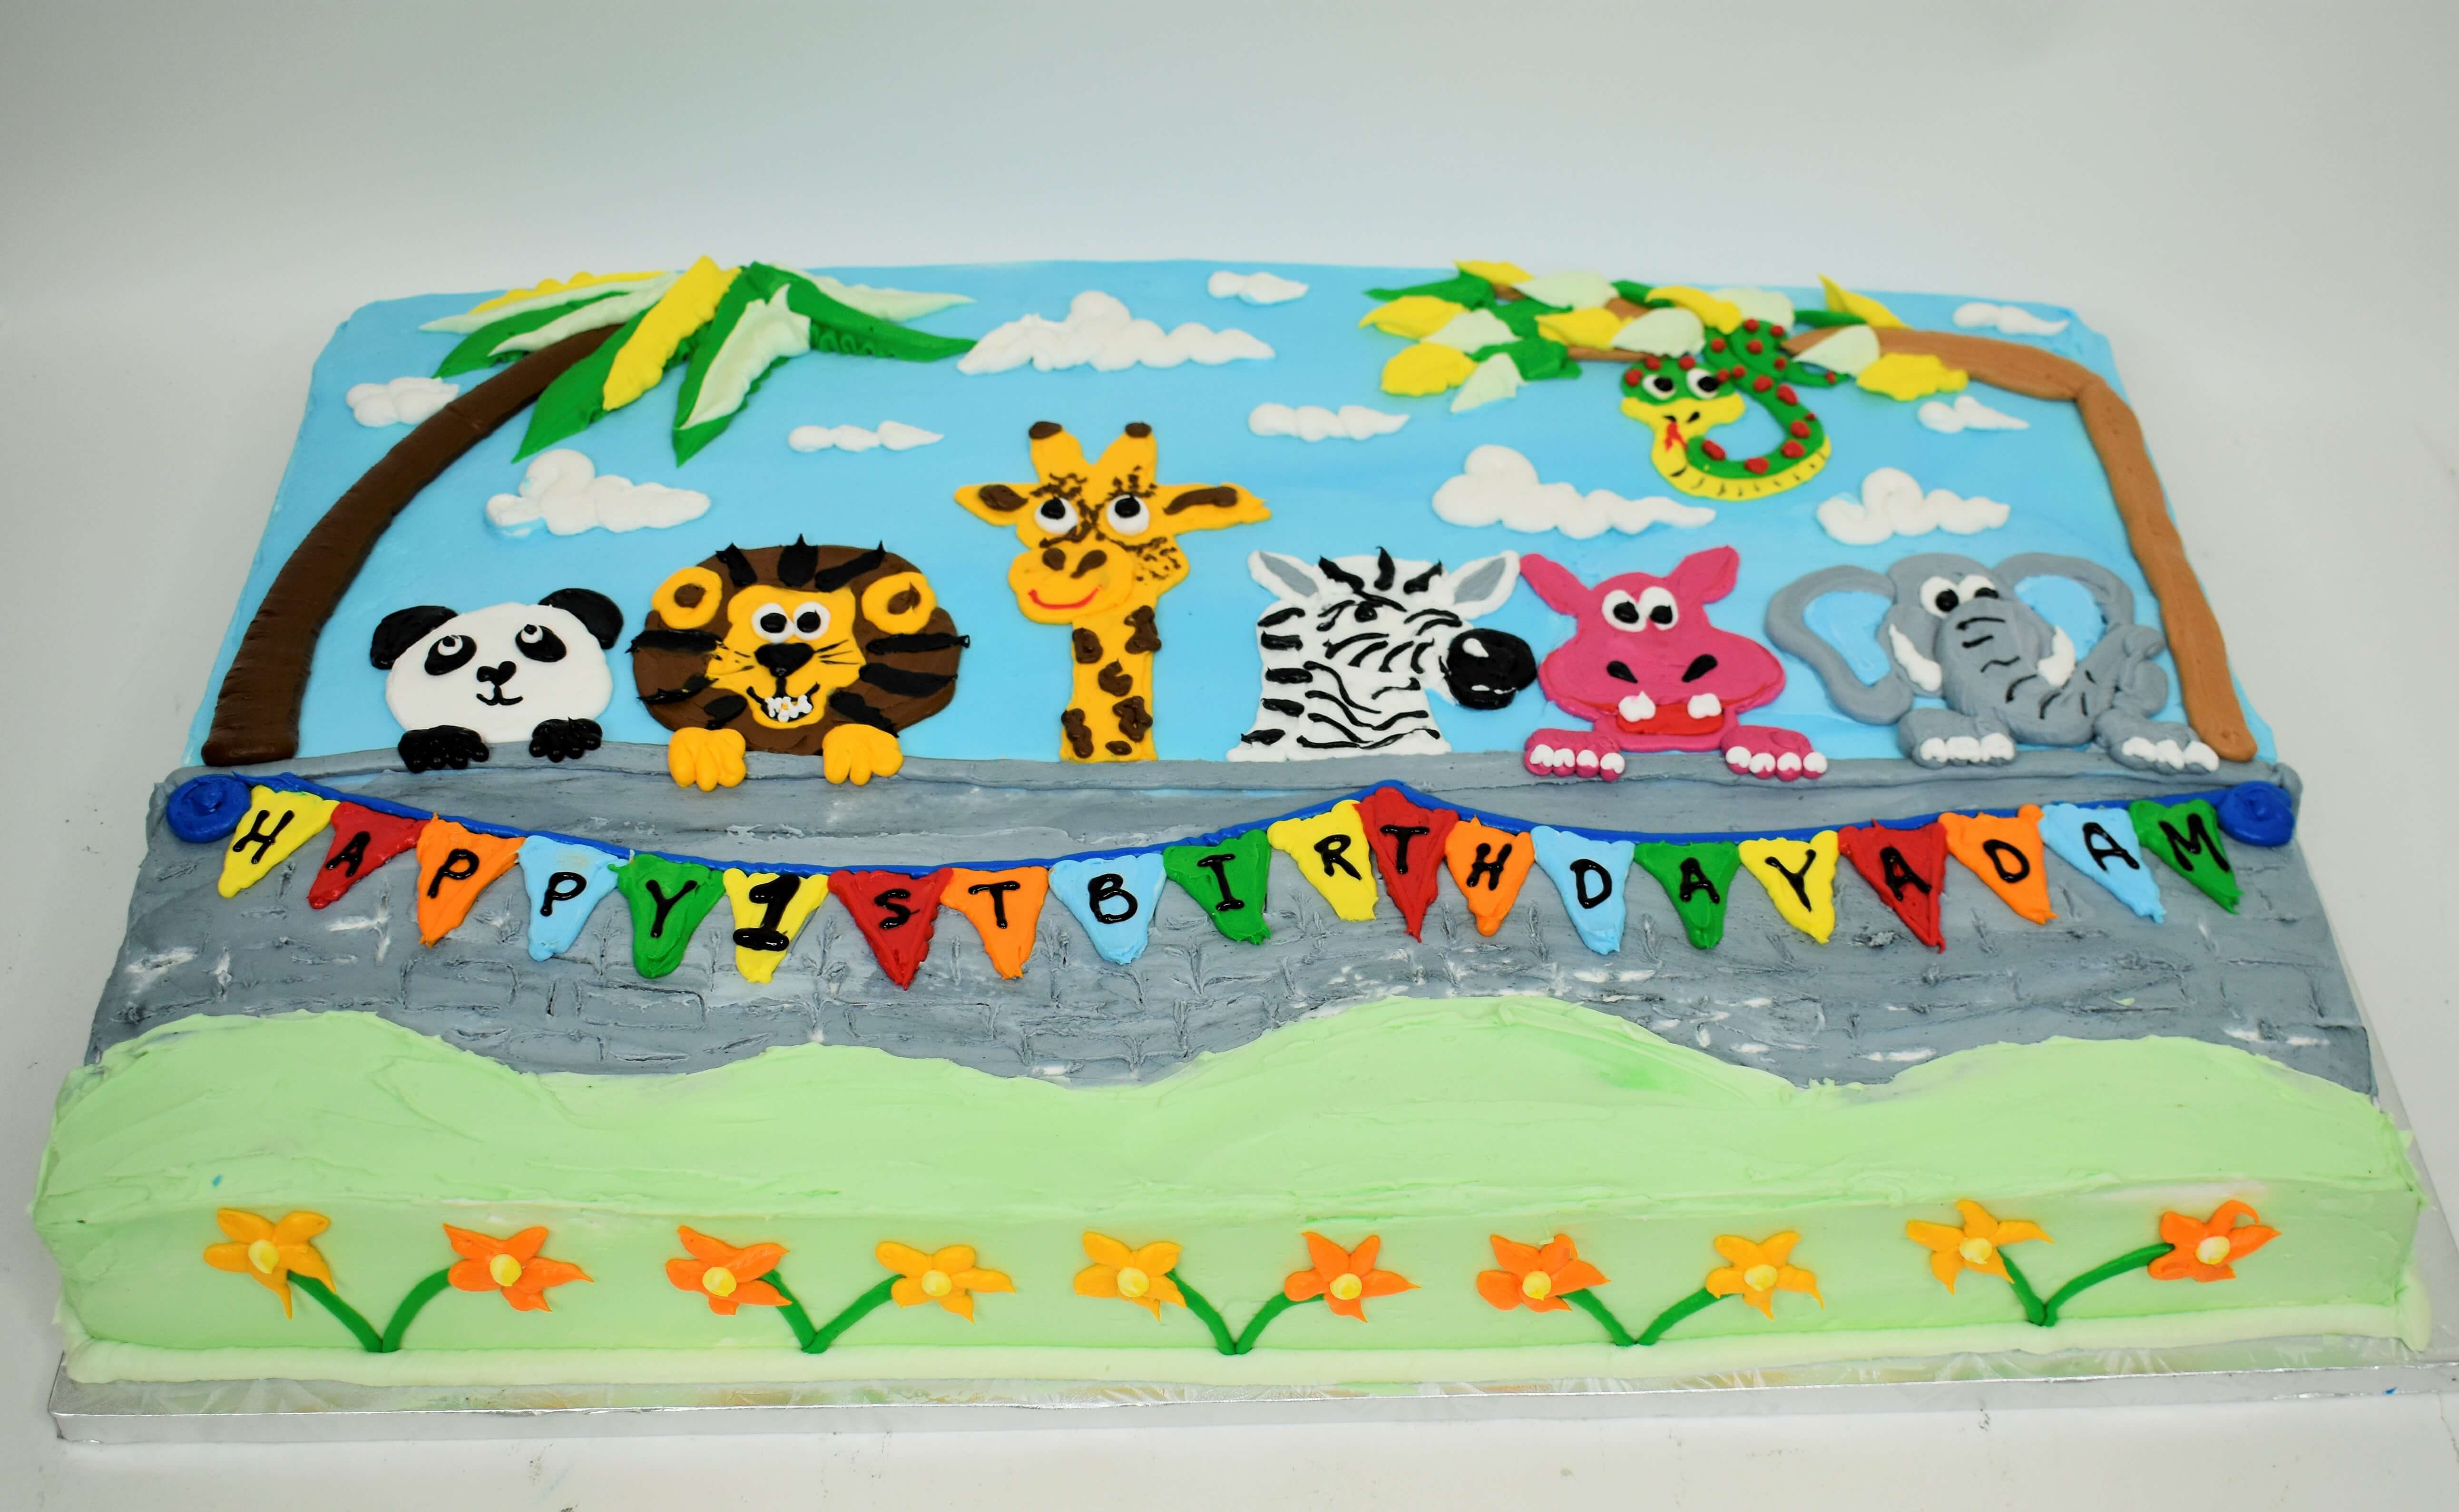 McArthur's Bakery Custom Cake with wild Animals, Palm Trees, Happy Birthday Banner